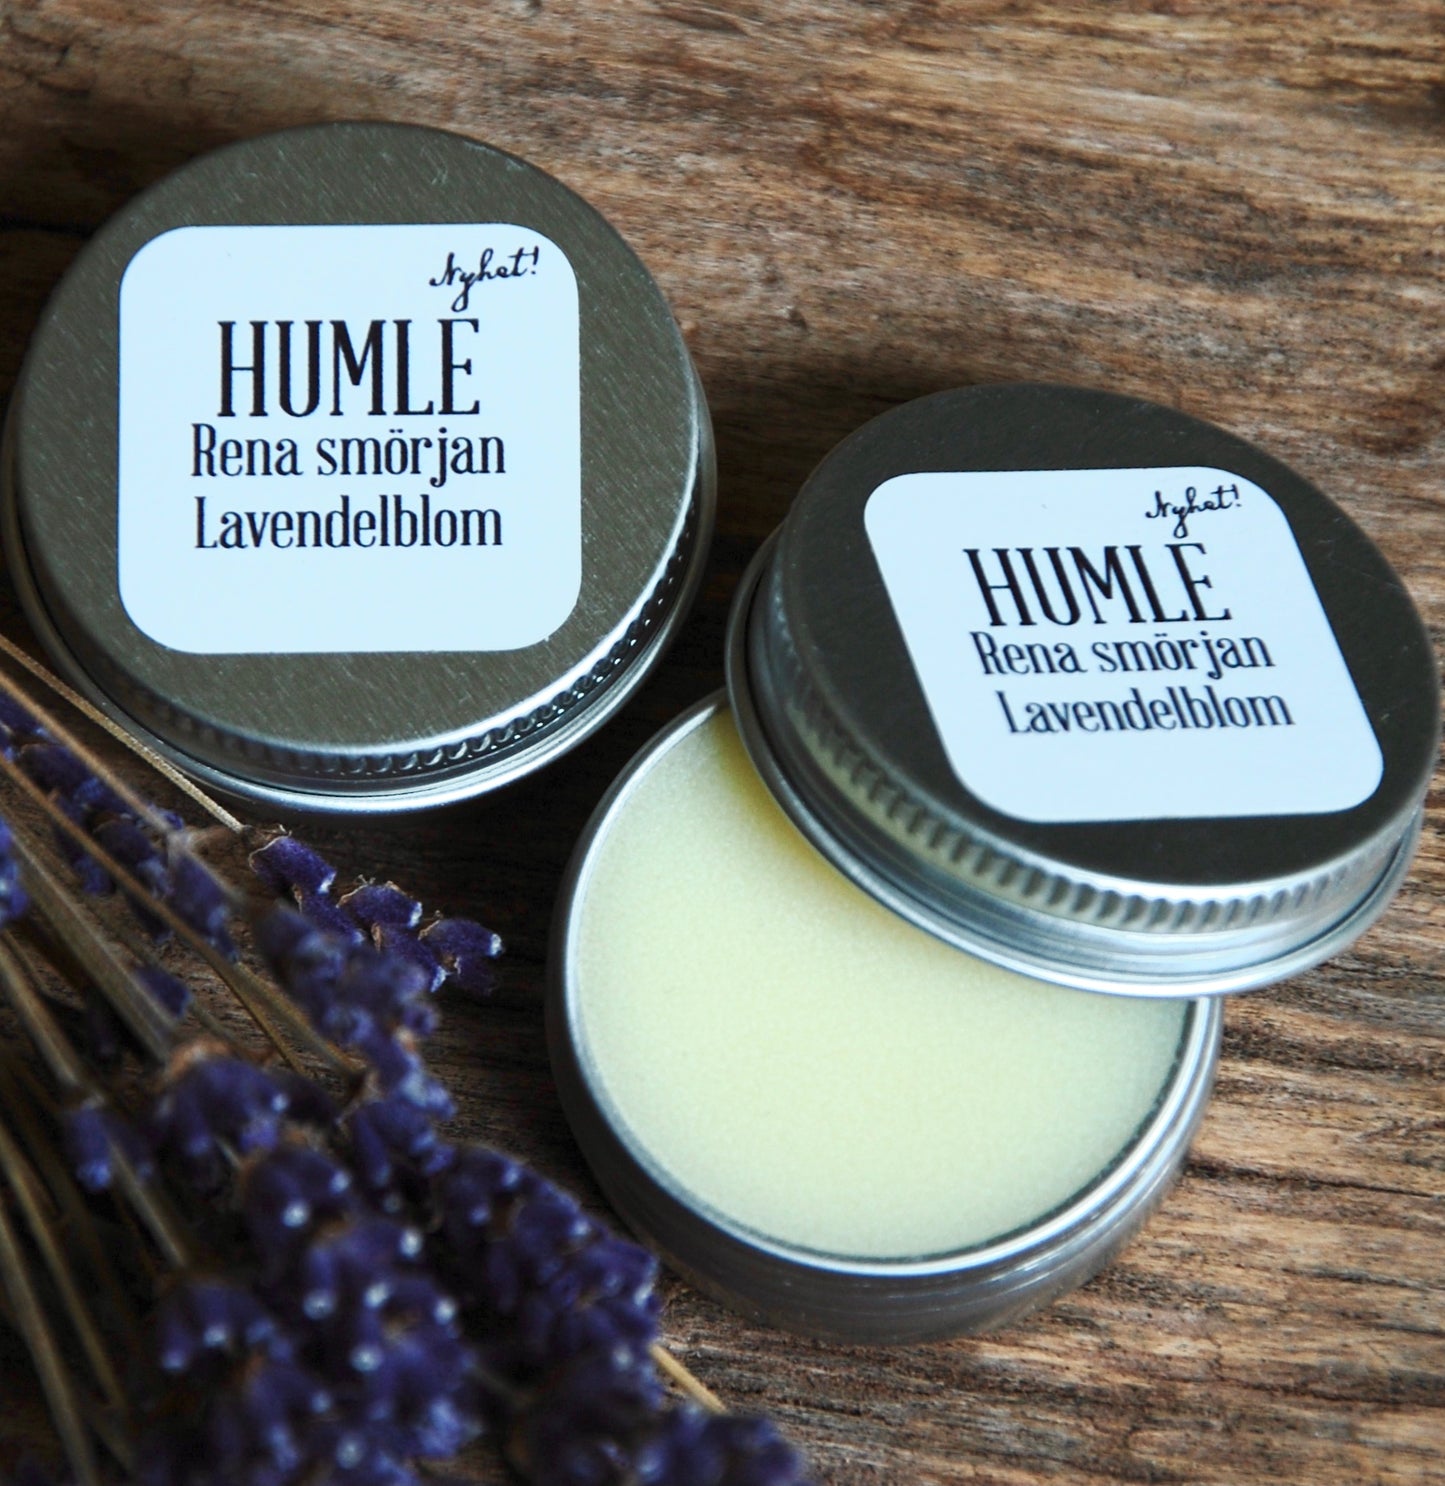 HUMLE Rena Smörjan Lavendelblom nurturing ointment, 60 ml 6 pcs/pck. Price out: SEK 265